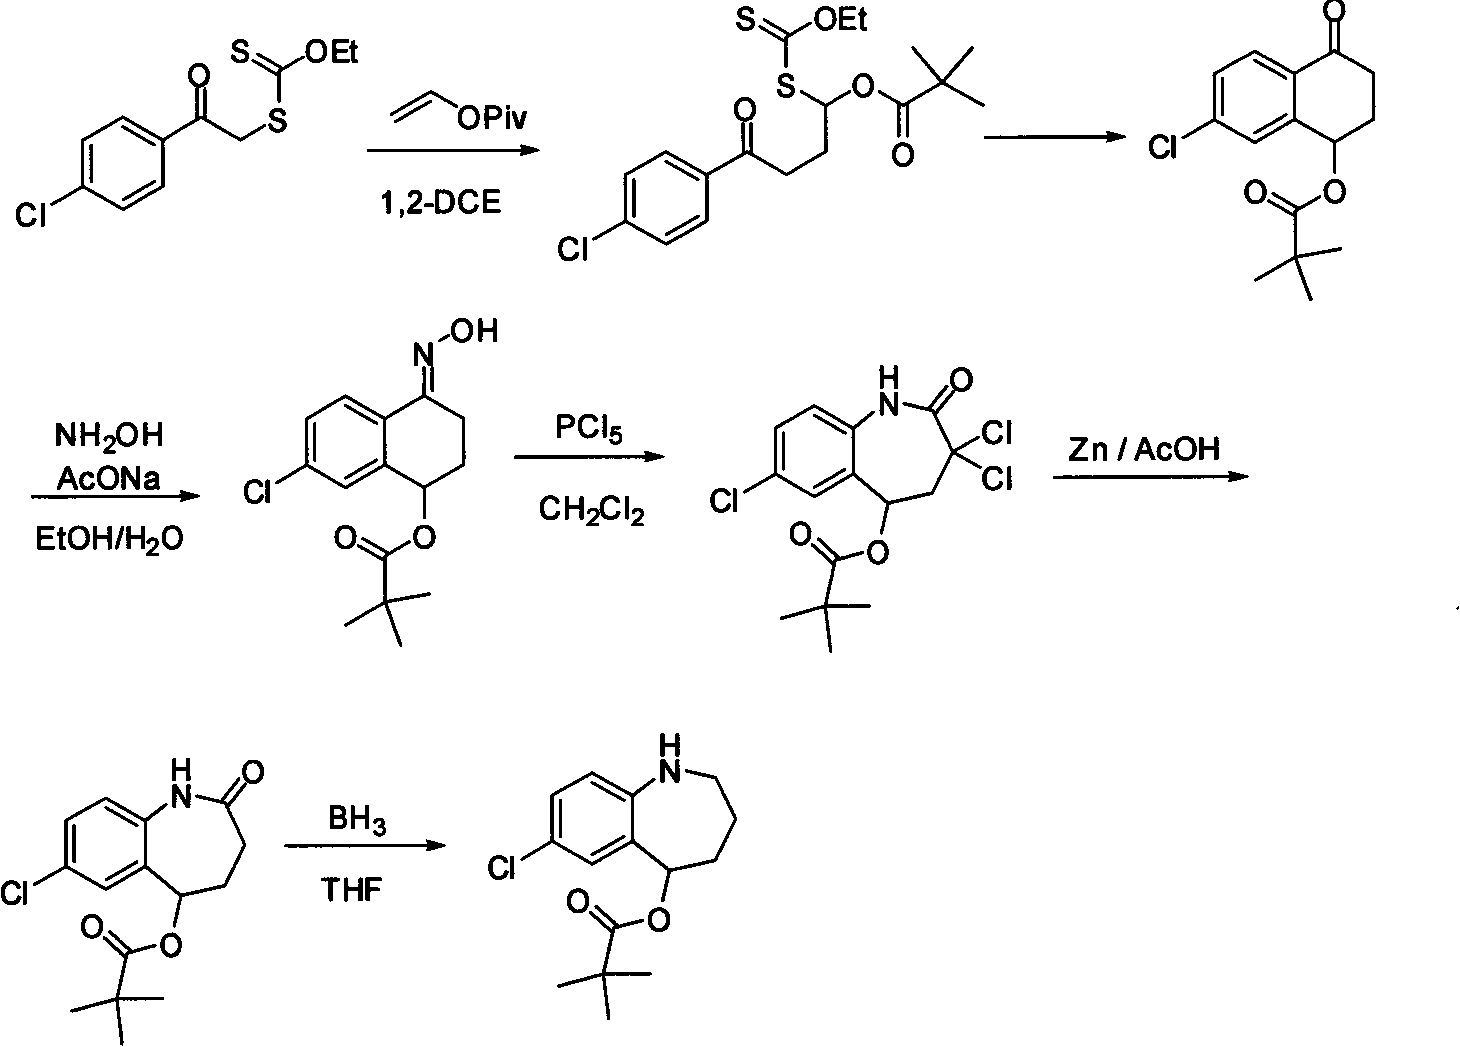 Method for preparing 7-chloro-2,3,4,5-tetrahydro-1H-1-benzazepino-5-ketone